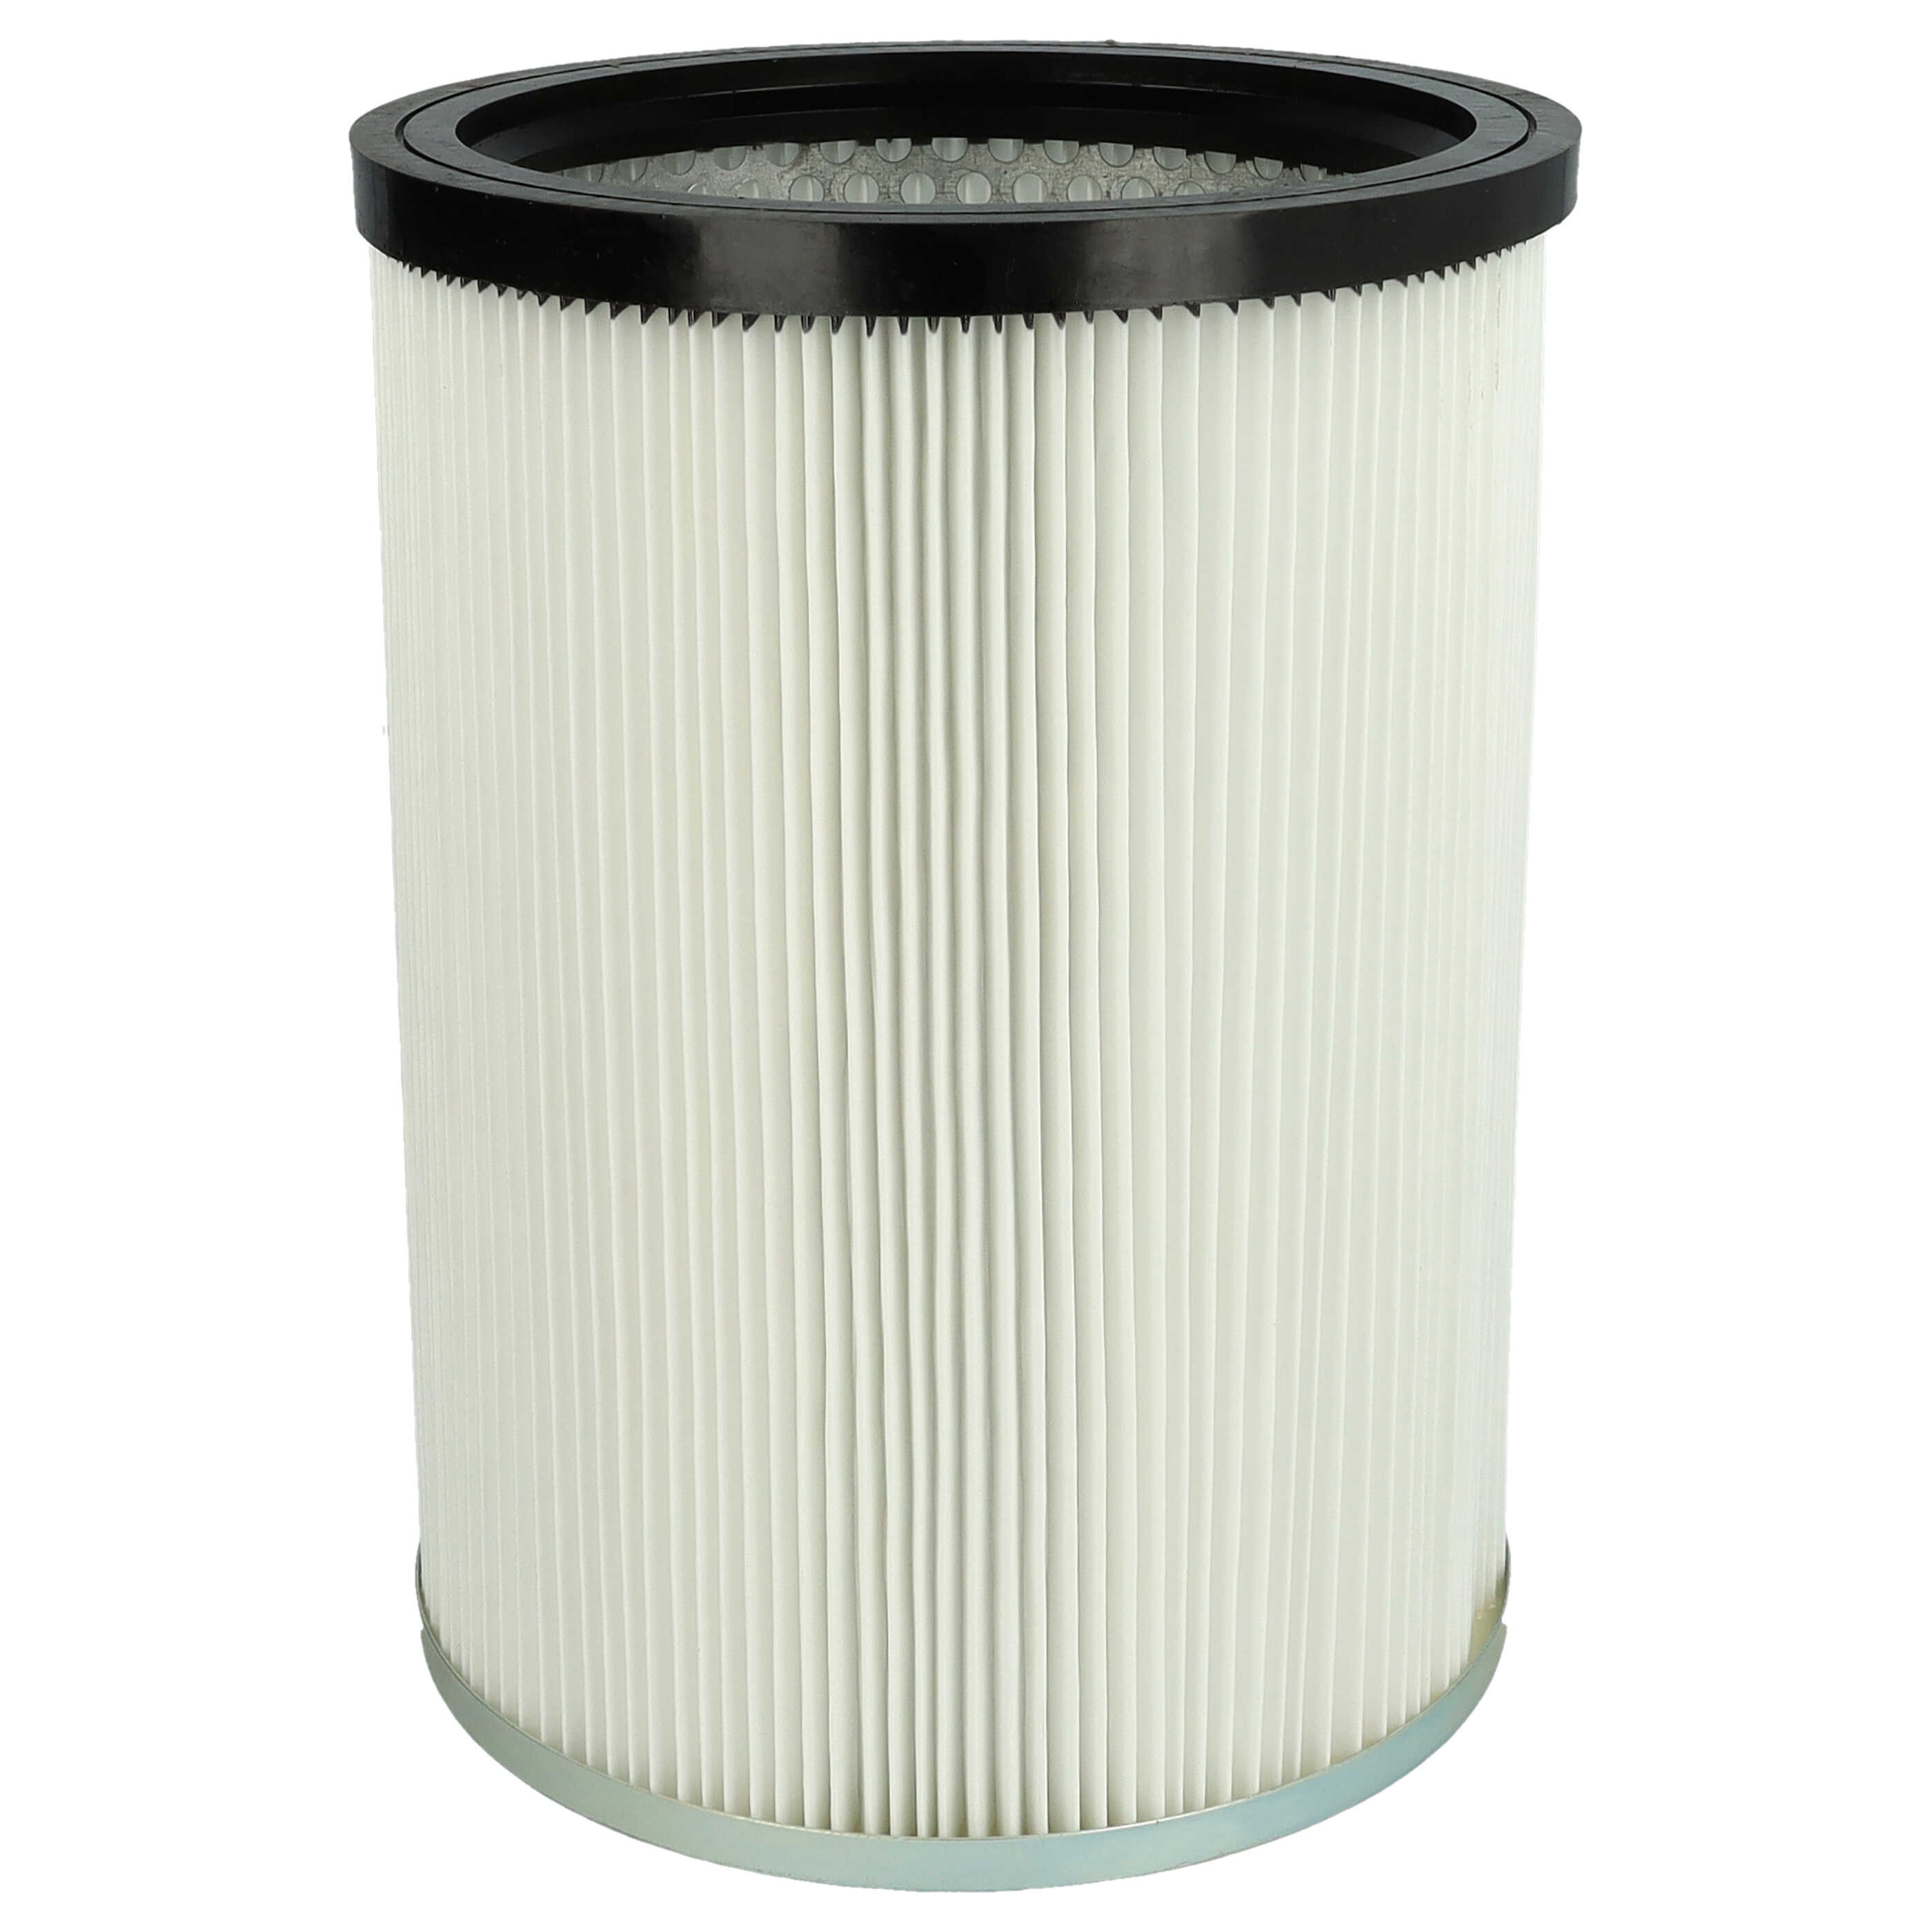 1x cartridge filter replaces Kärcher 9.770-988.0, 6.907-038.0 for KärcherVacuum Cleaner, white